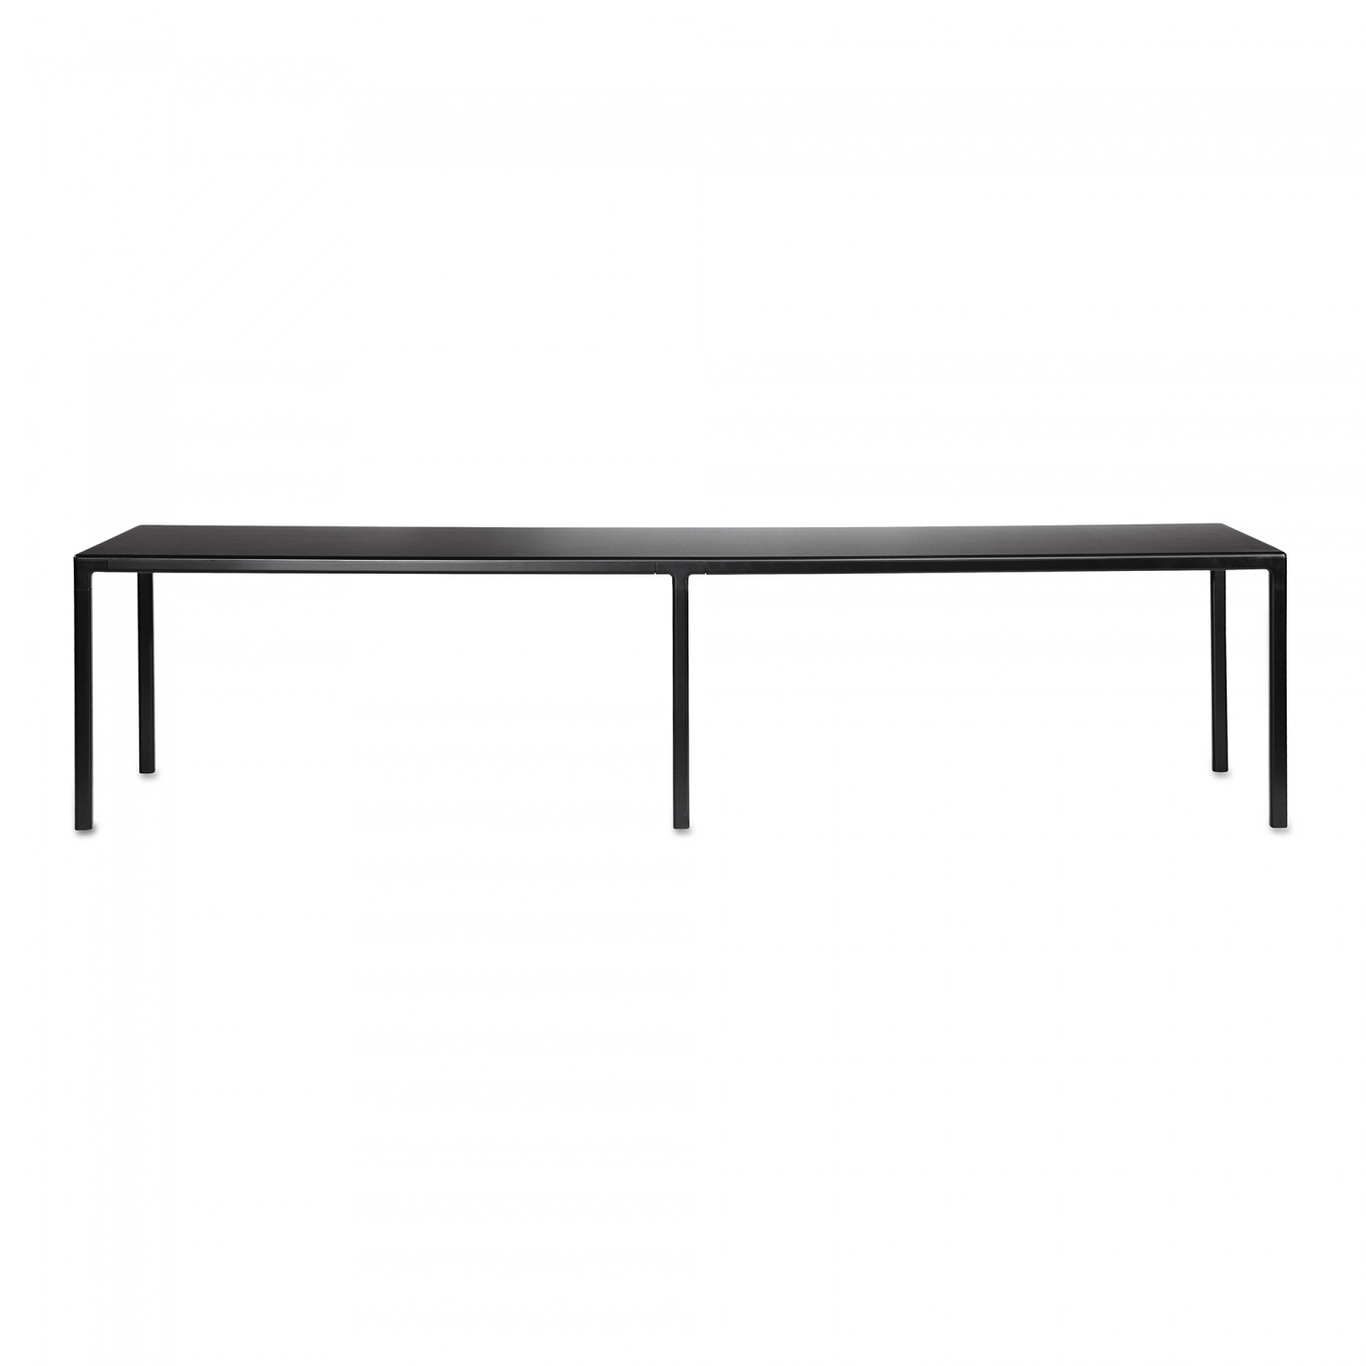 T12 Table 95x320 cm, Black